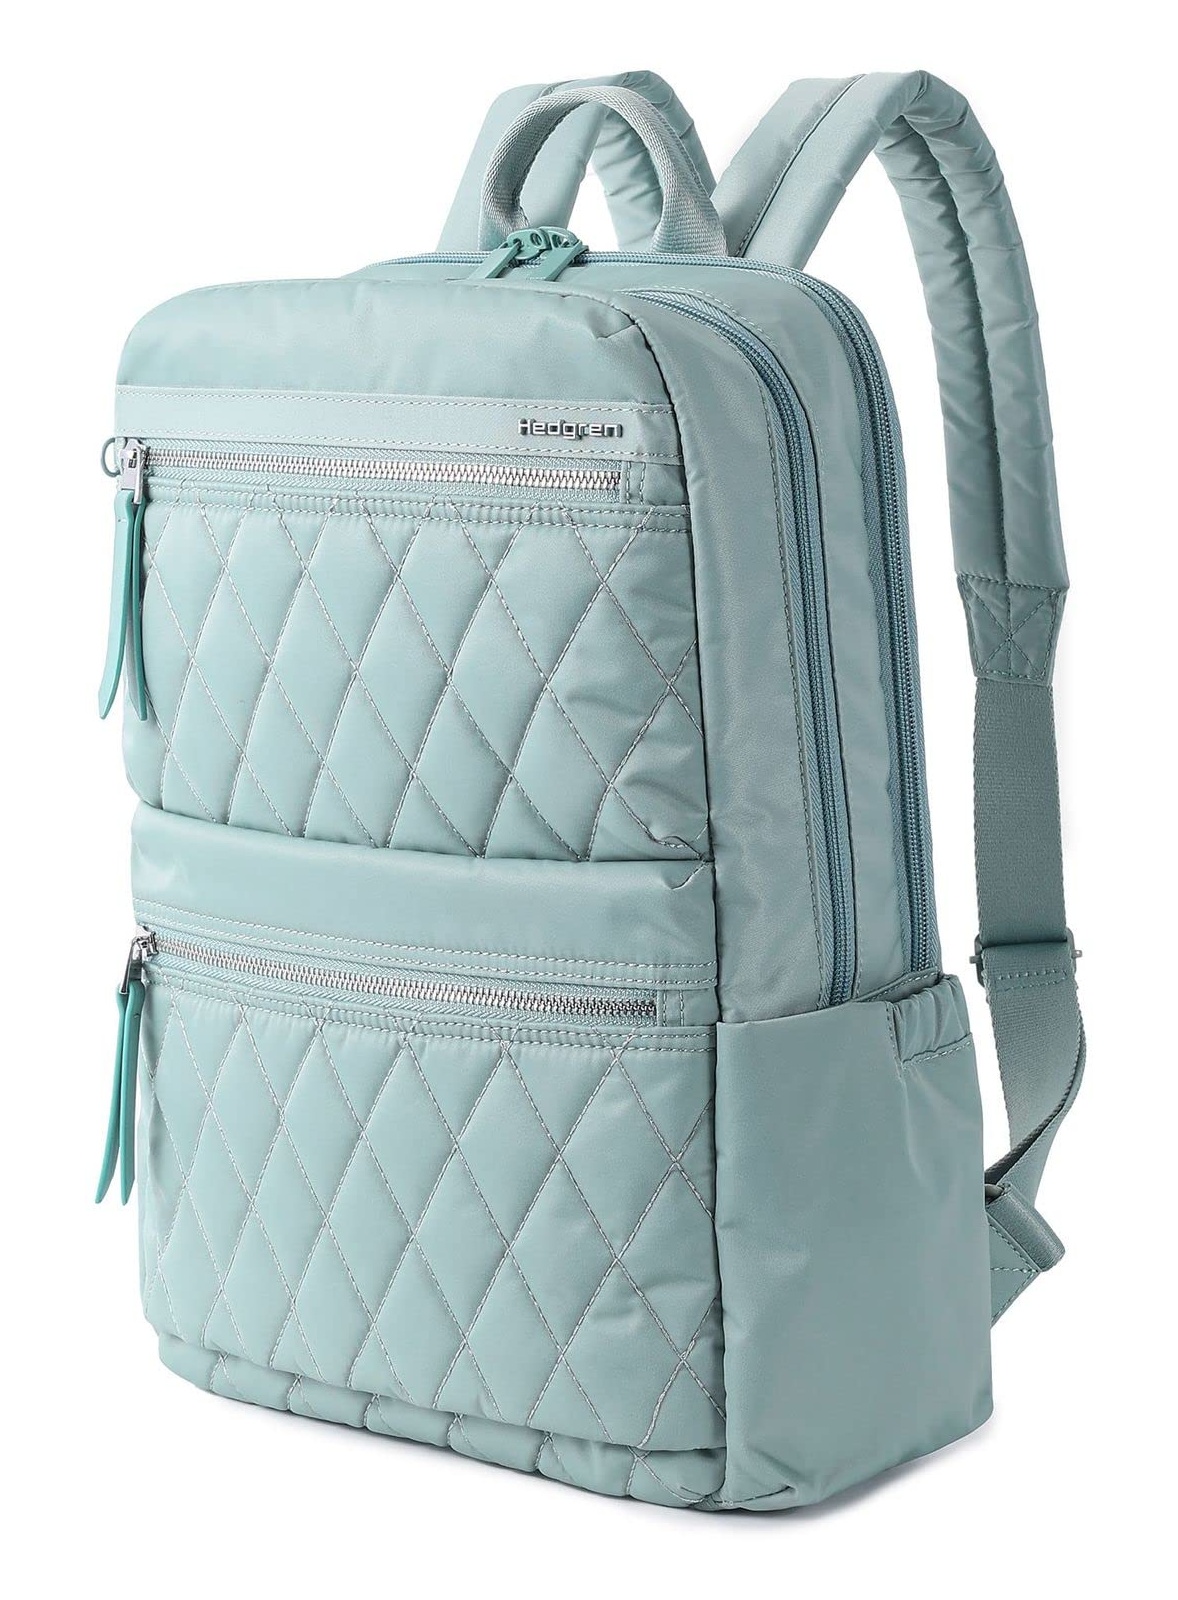 hedgren backpack